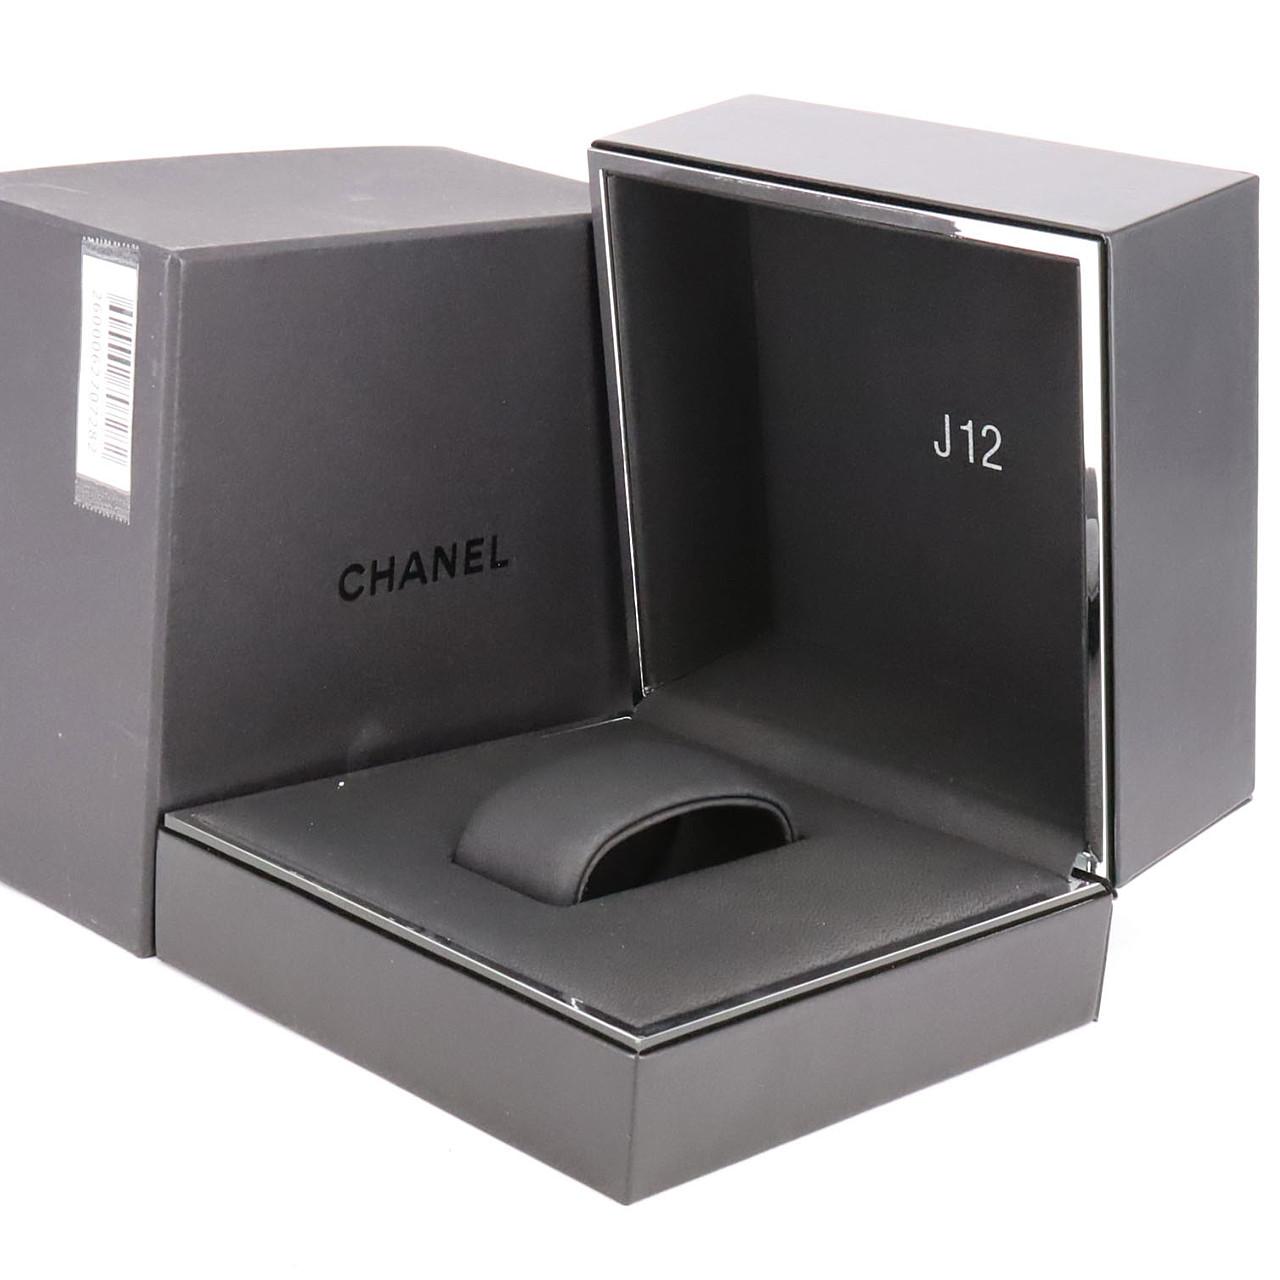 CHANEL J12 Chronograph Ceramic H0940 Ceramic Automatic